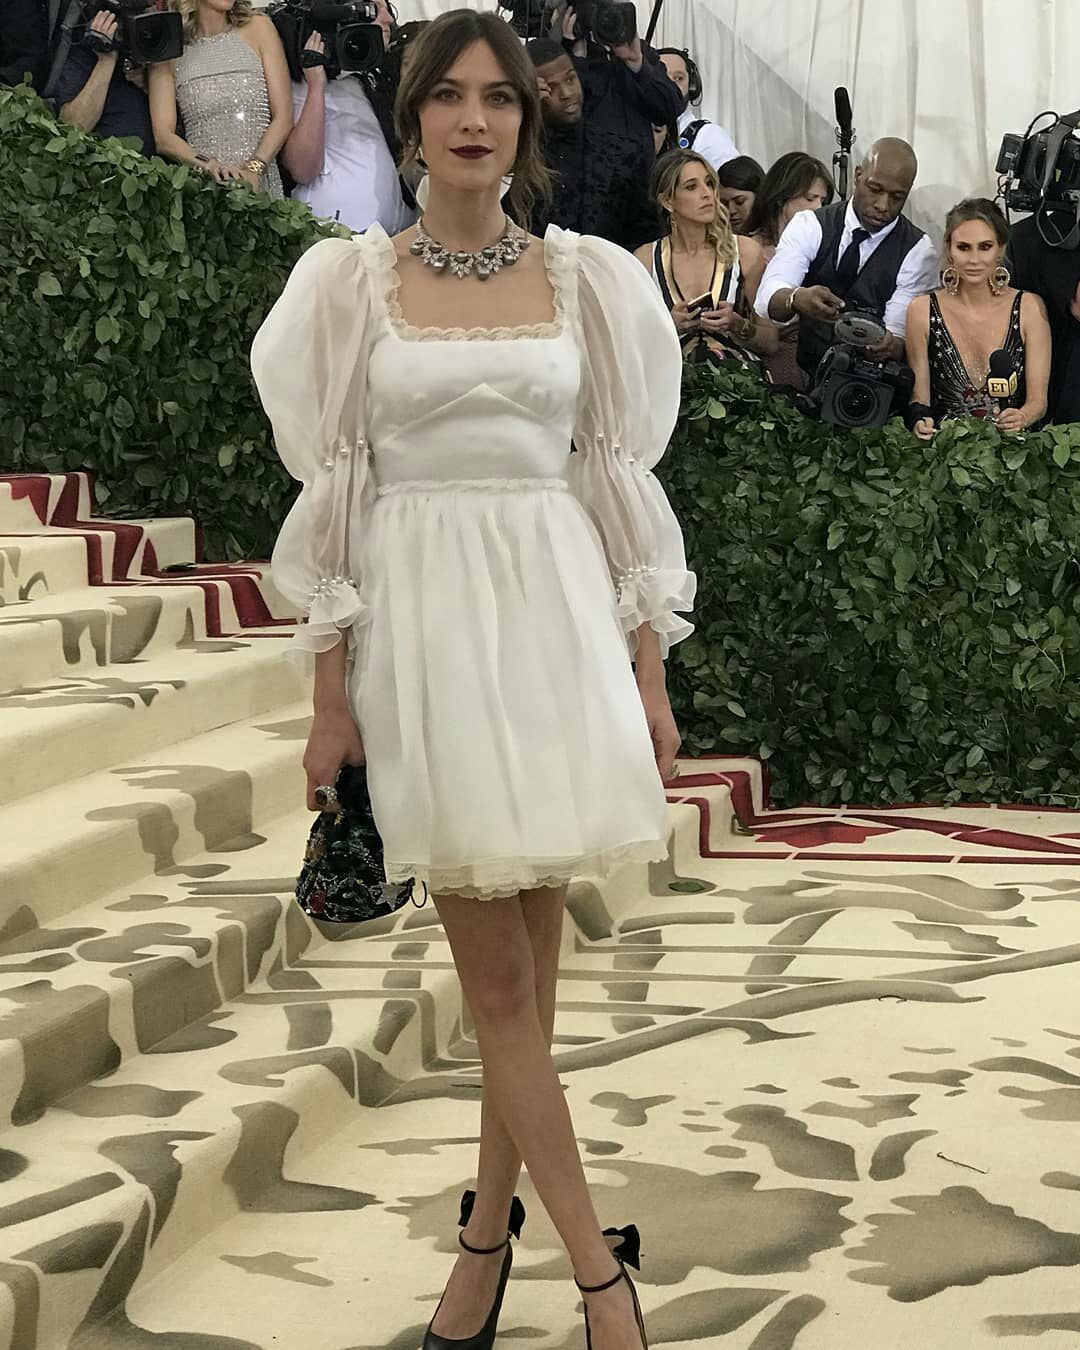 Chung attends the Met Gala 2018. Alexa